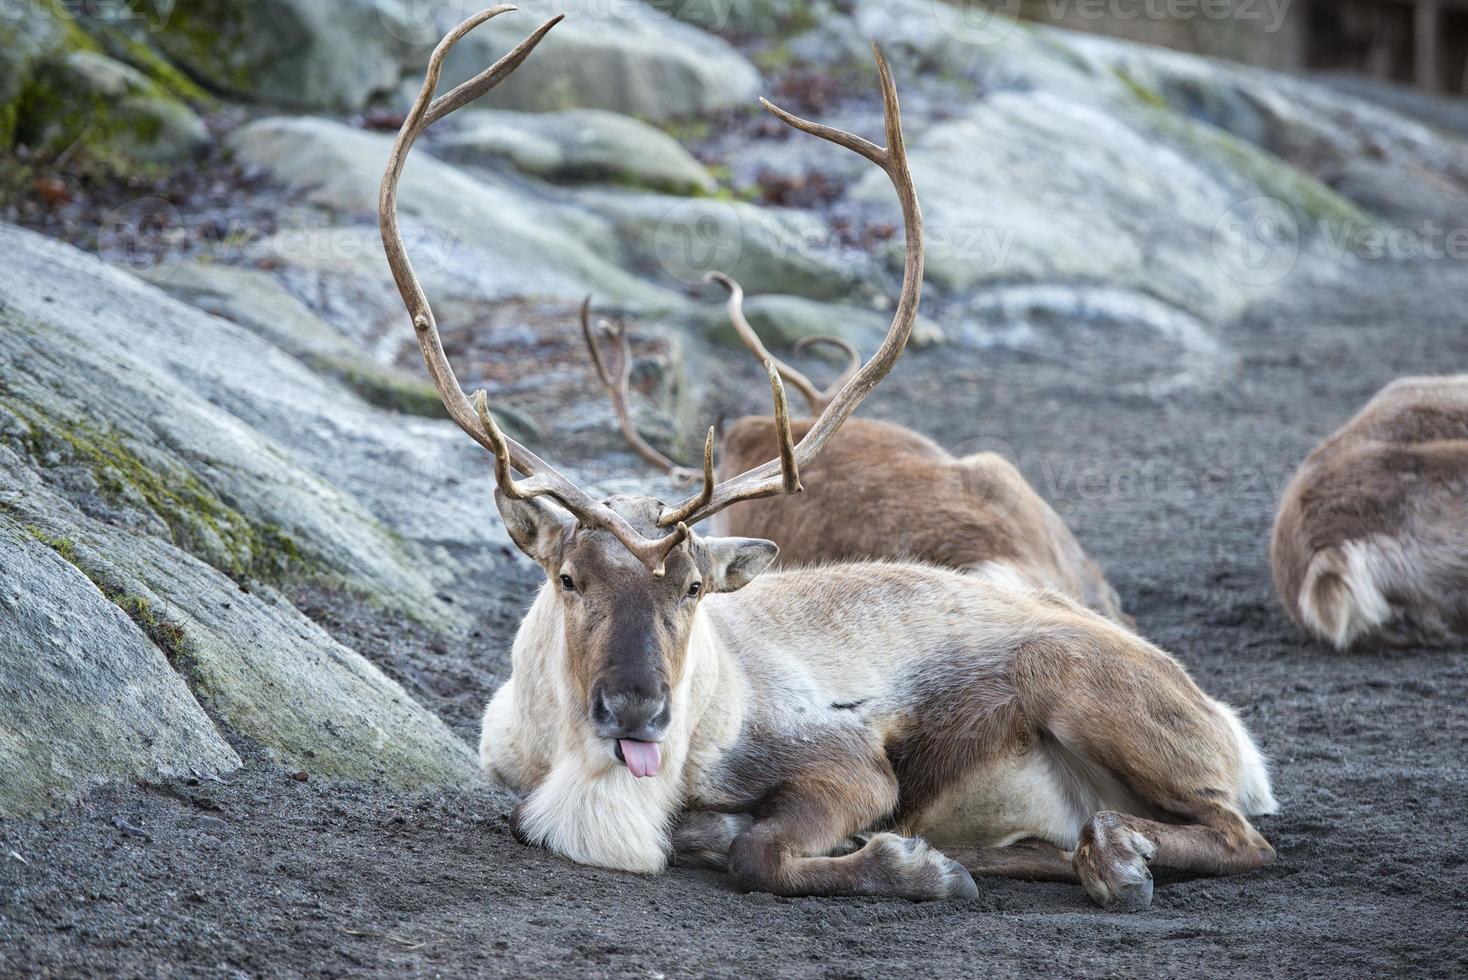 reindeer portrait in winter time photo